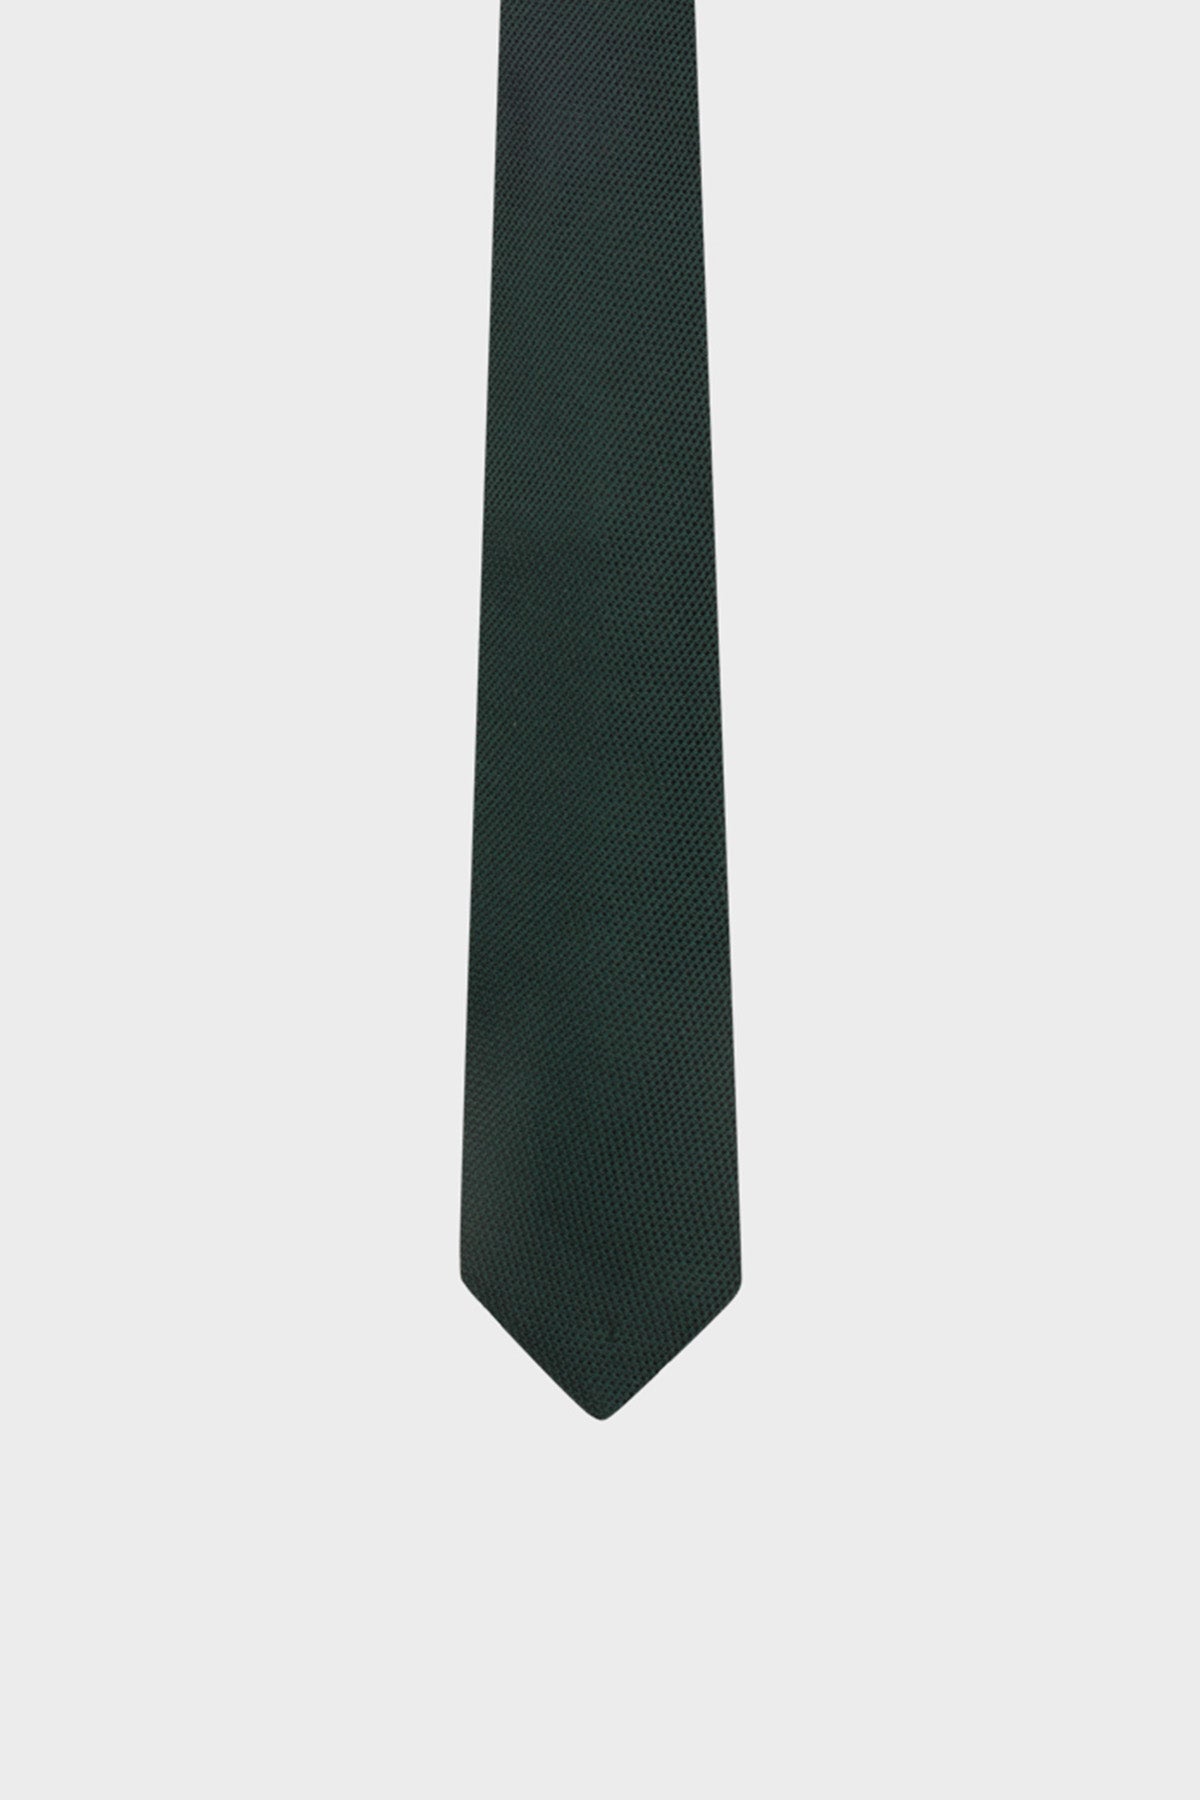 Cravate Grenadine Verte